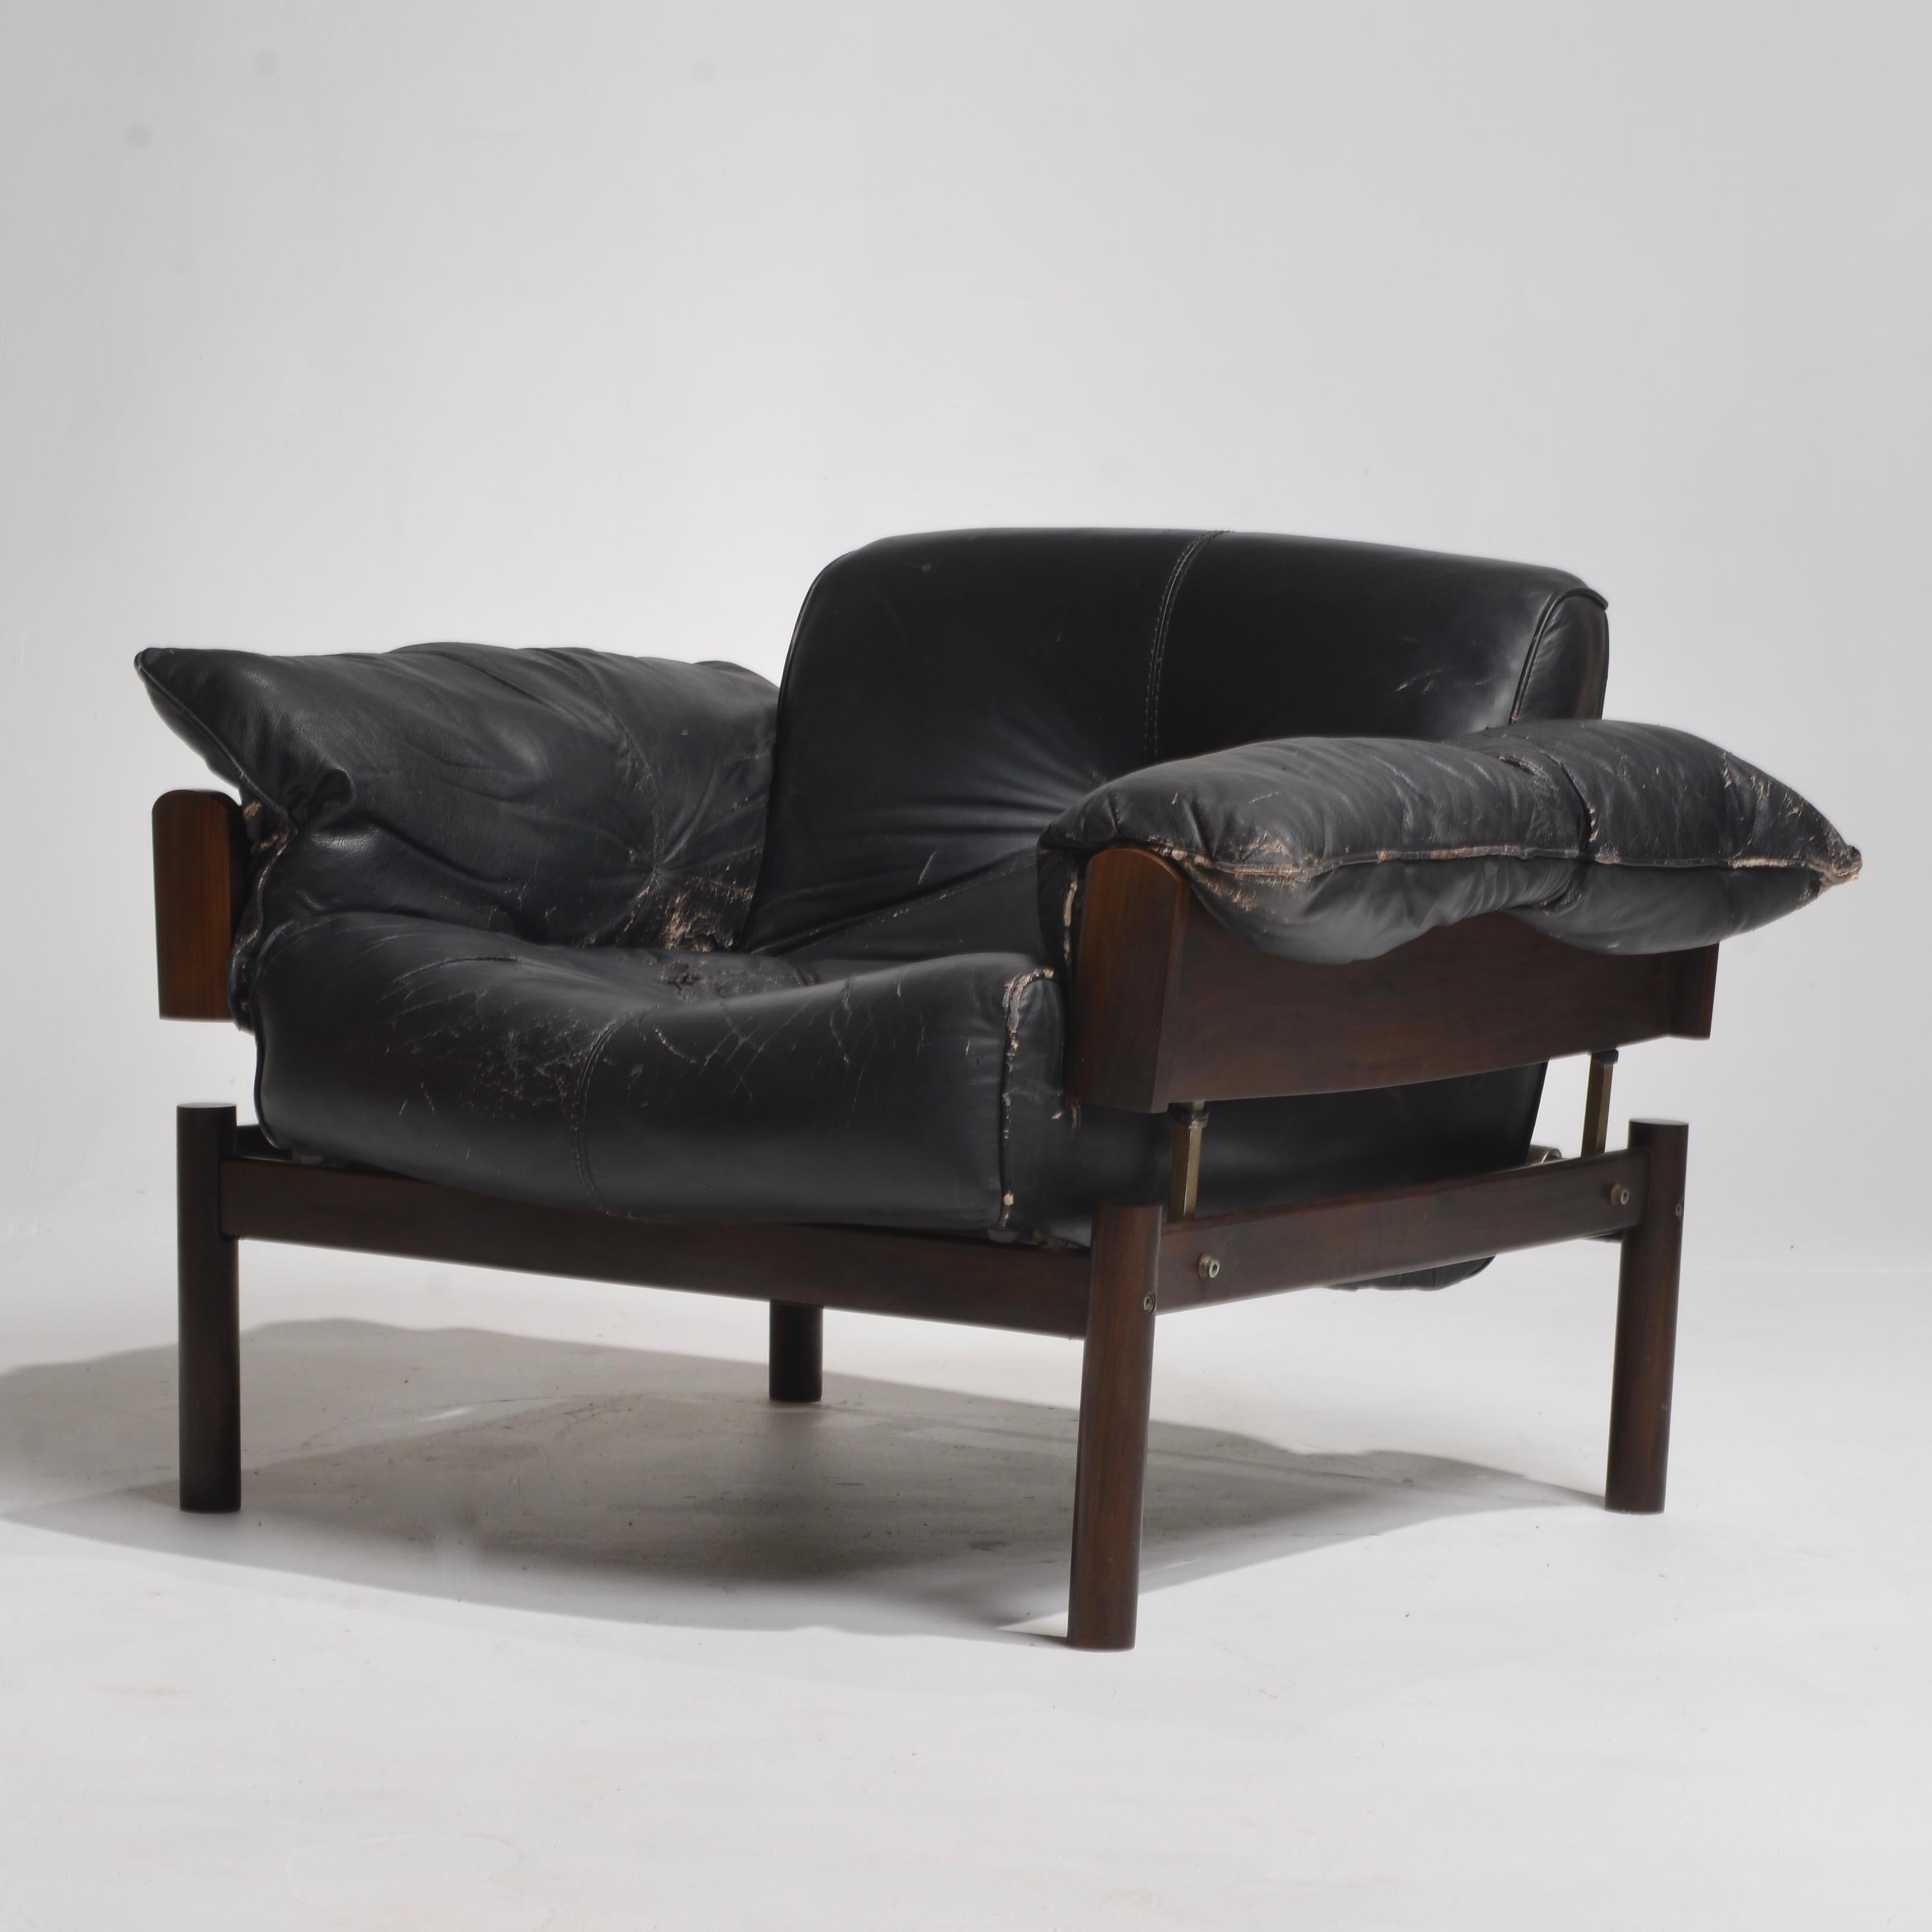 Percival Lafer Brazilian Modernist Rosewood Chair Model MP-013 7